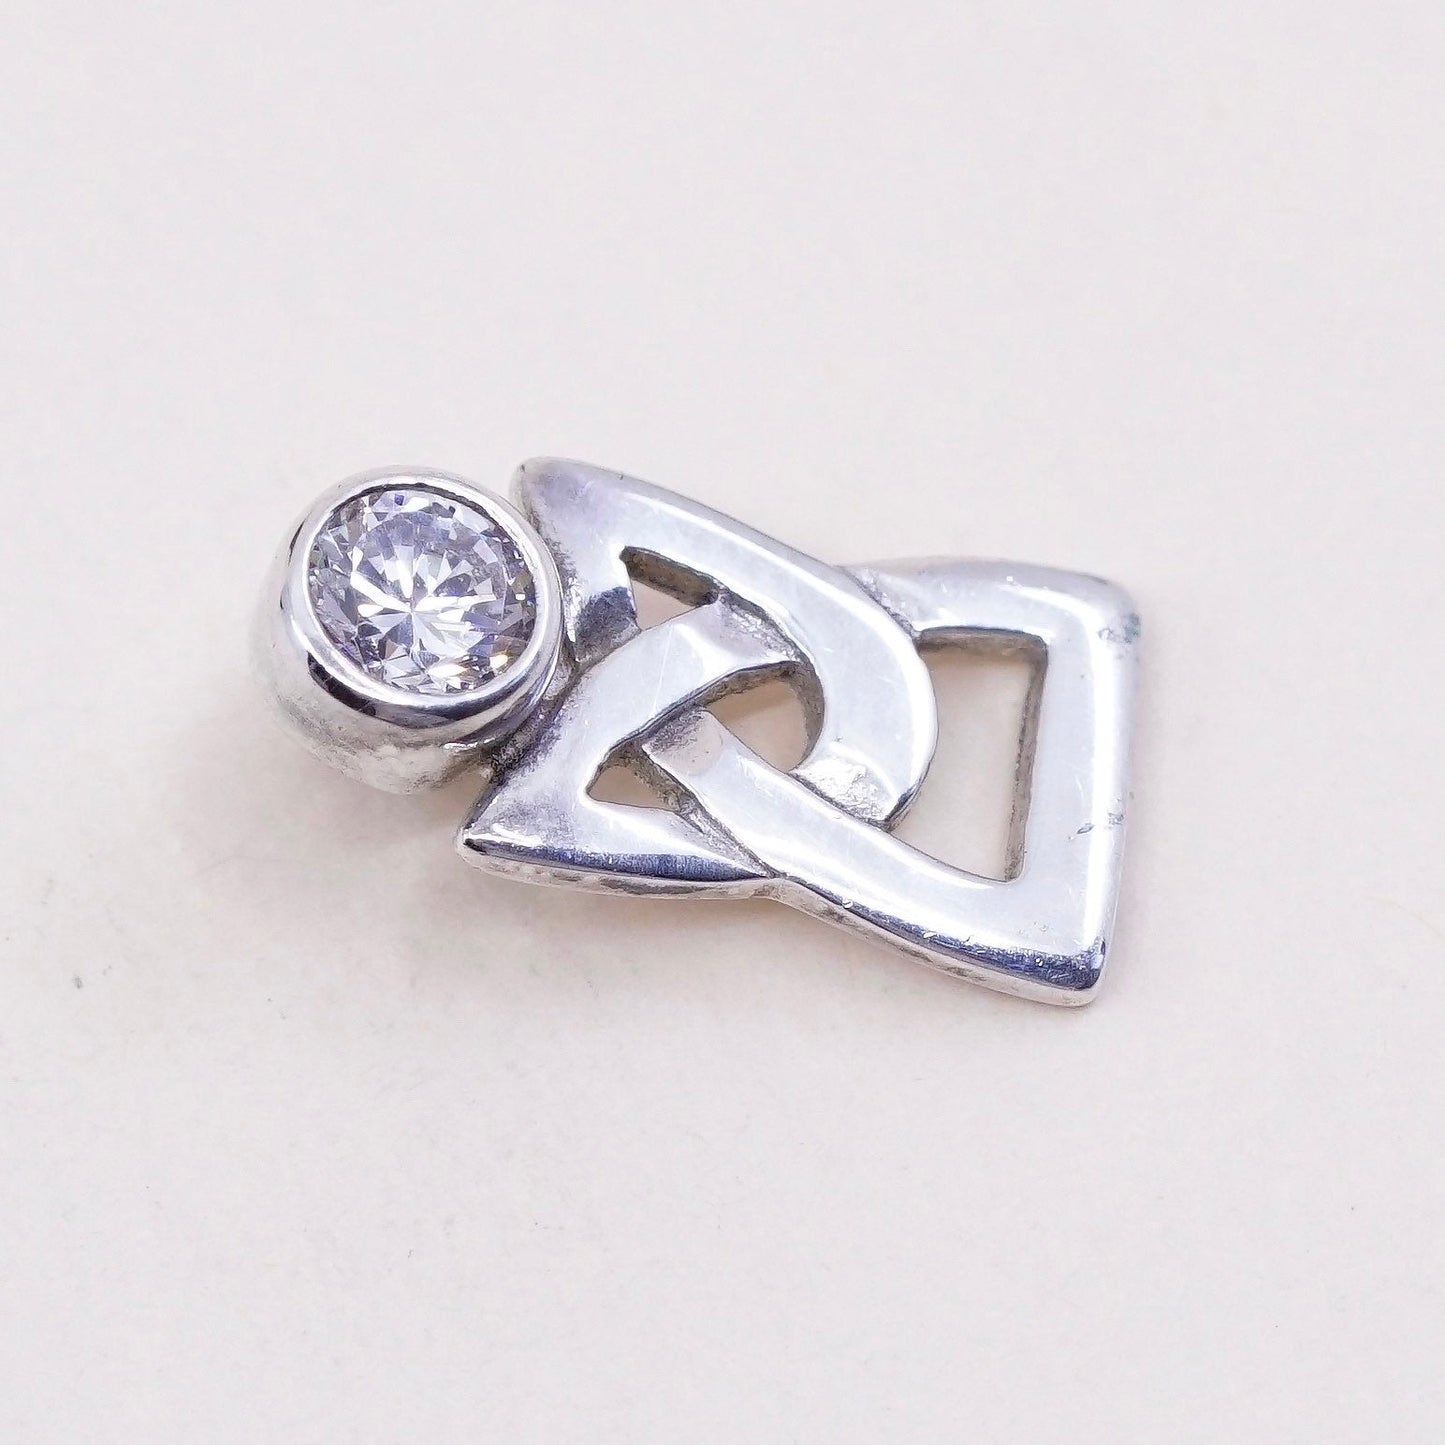 Vintage sterling silver cz crystal pendant, 925 charm, stamped 925